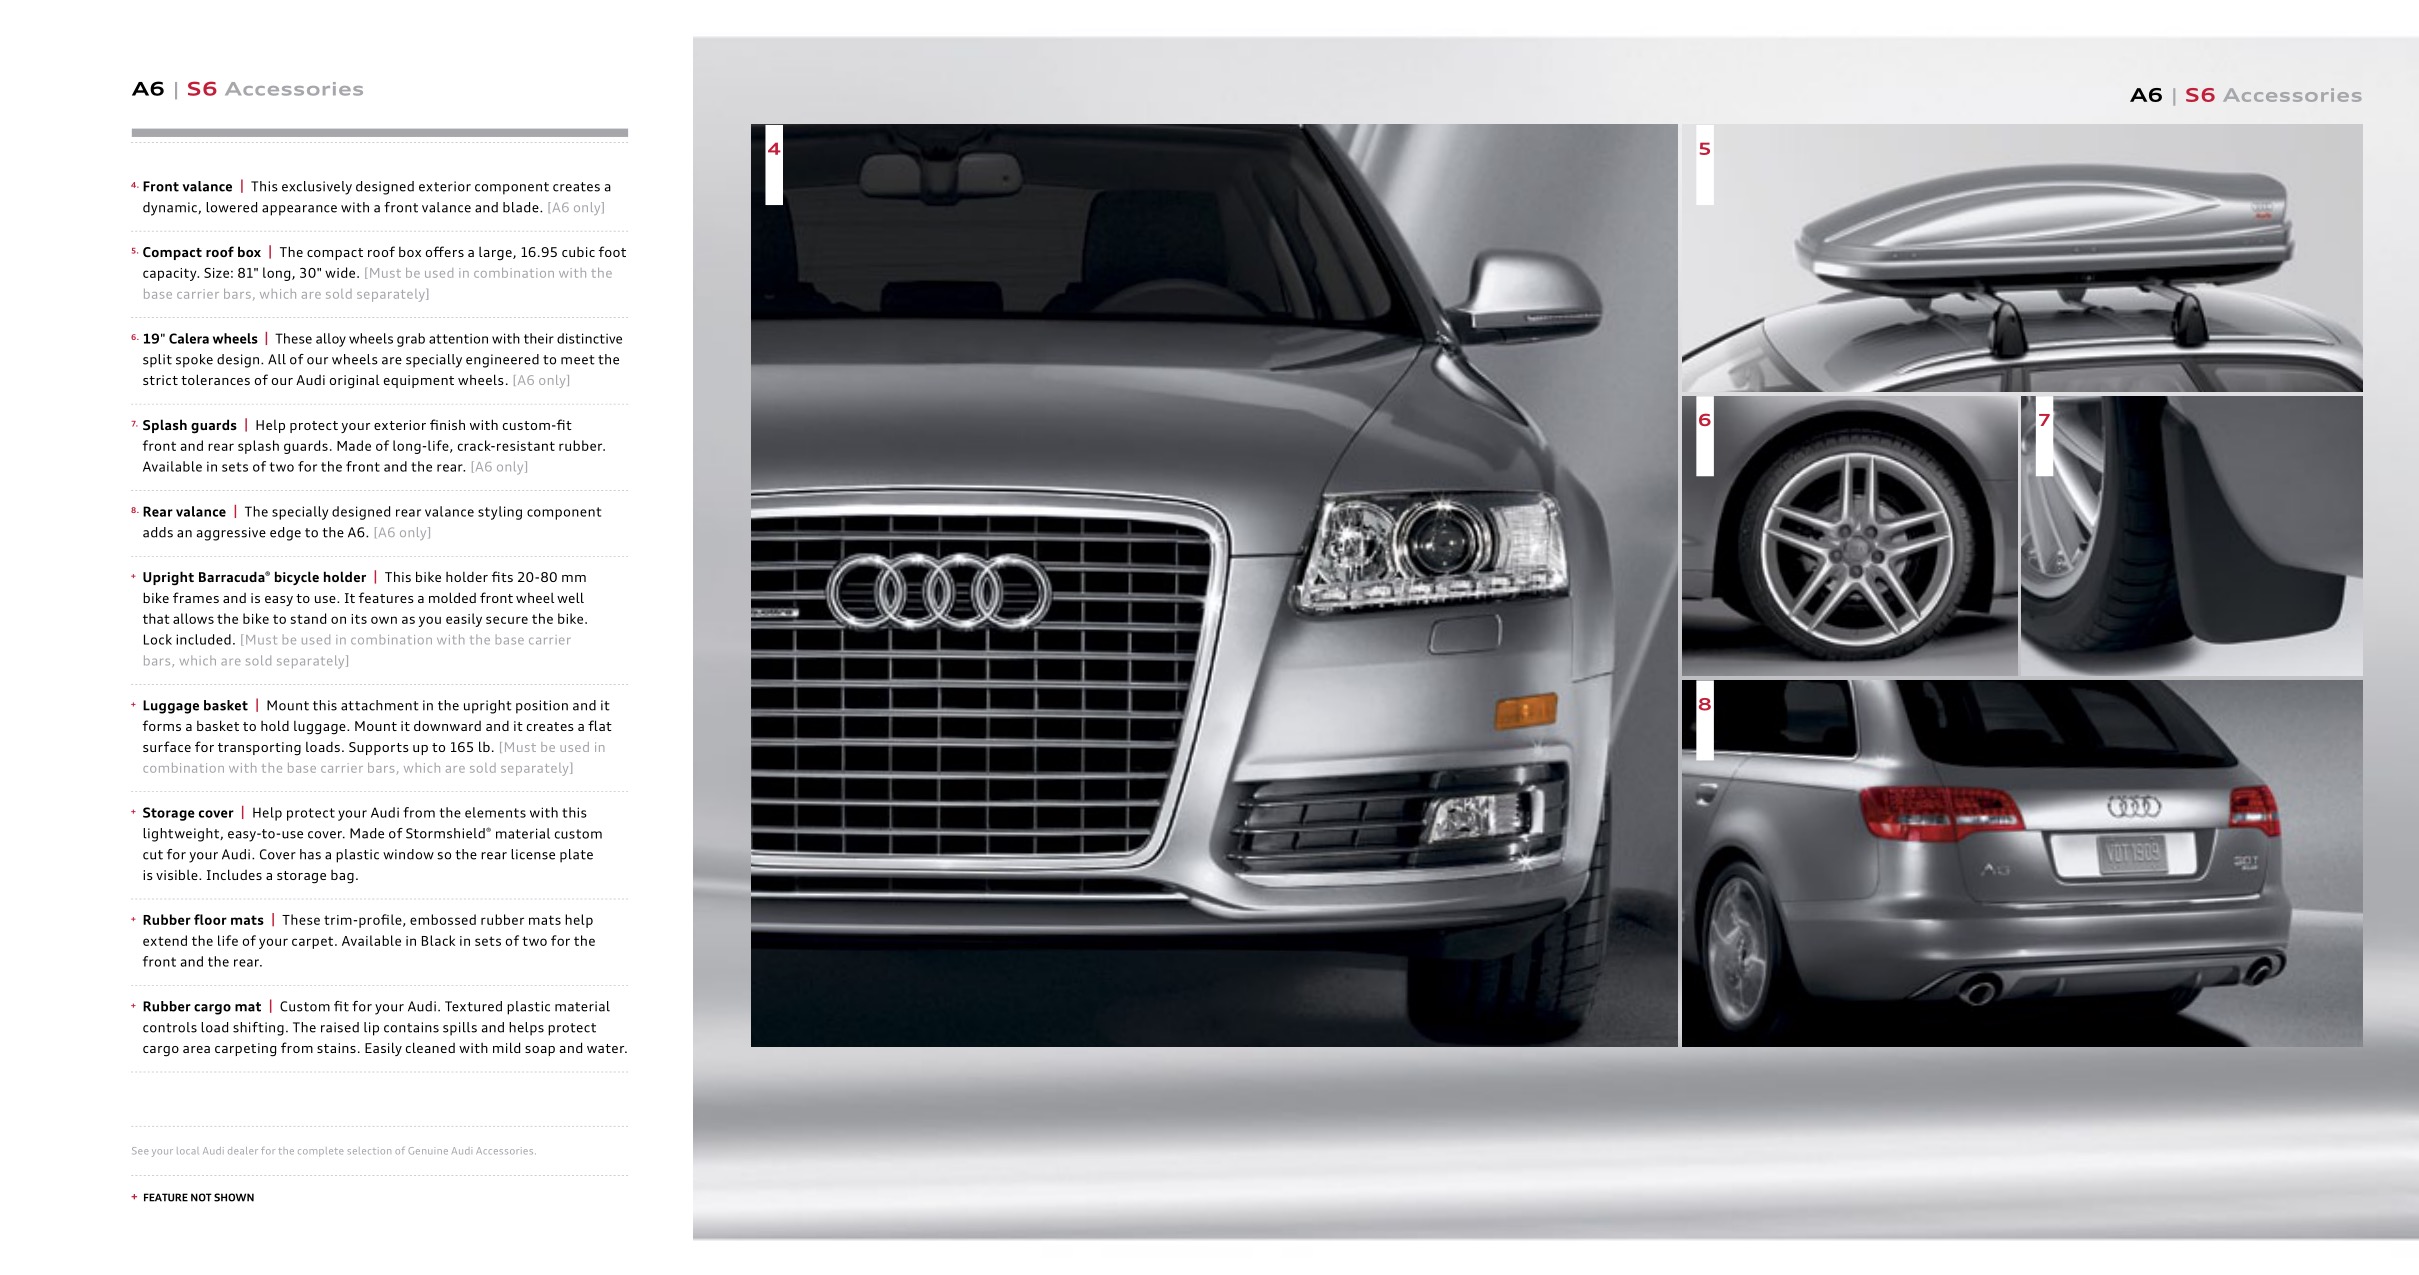 2010 Audi A6 Brochure Page 4